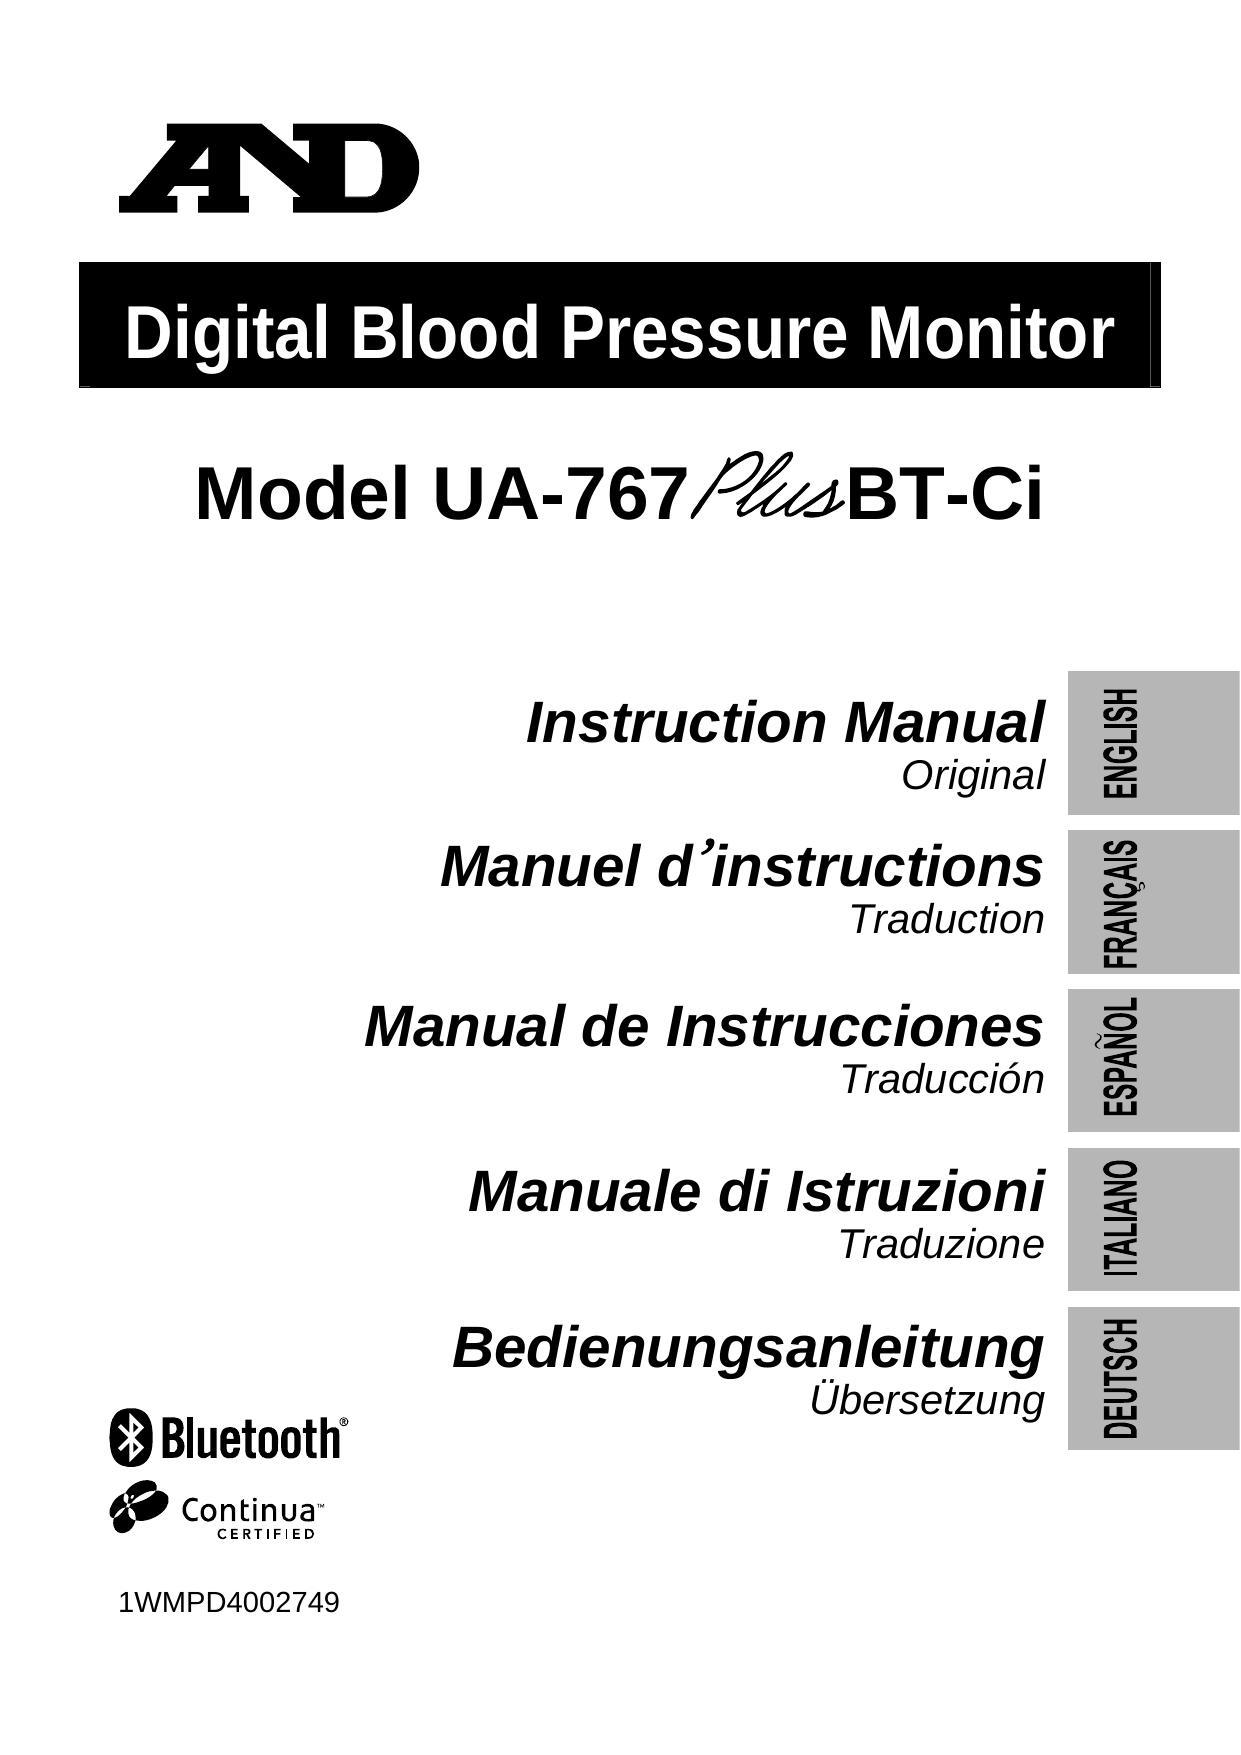 instruction-manual-for-ad-digital-blood-pressure-monitor-model-ua-767-puabt-ci.pdf